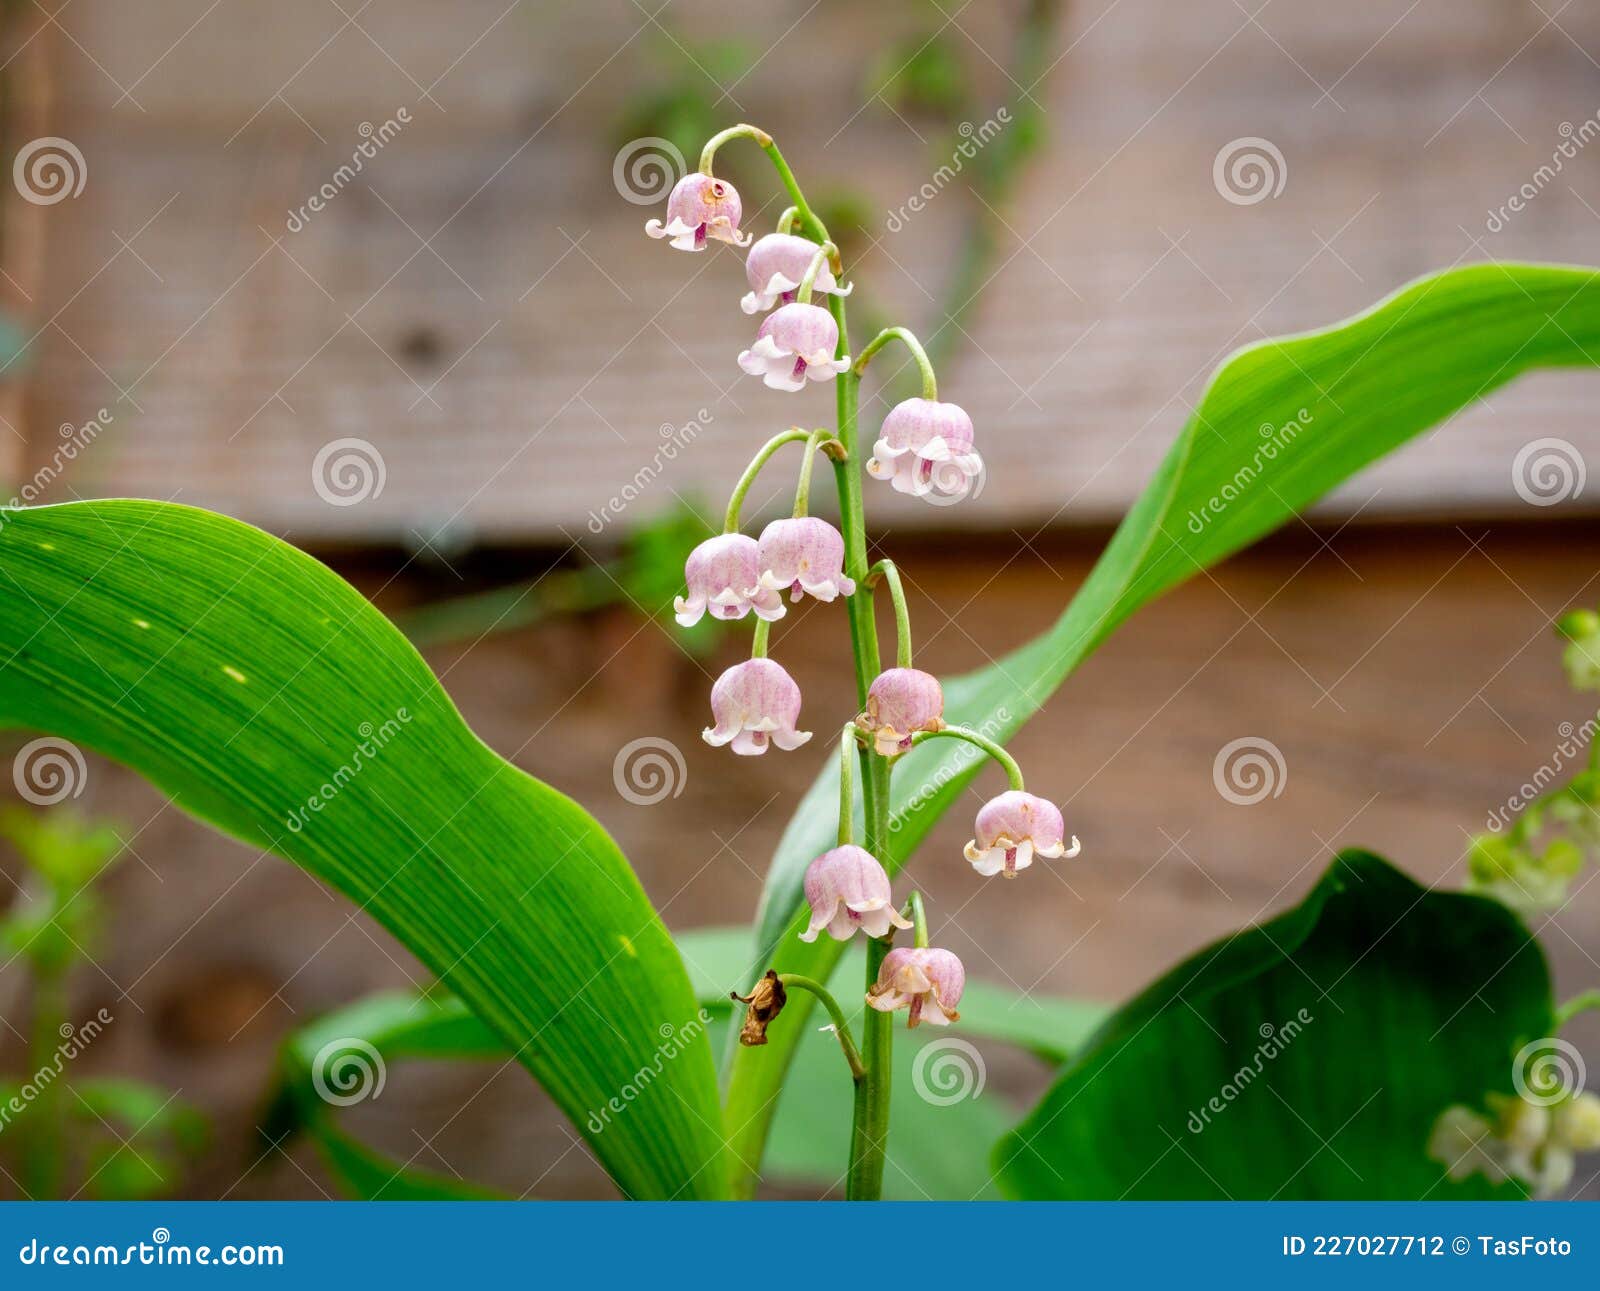 Rosea Lily of the Valley, Convallaria